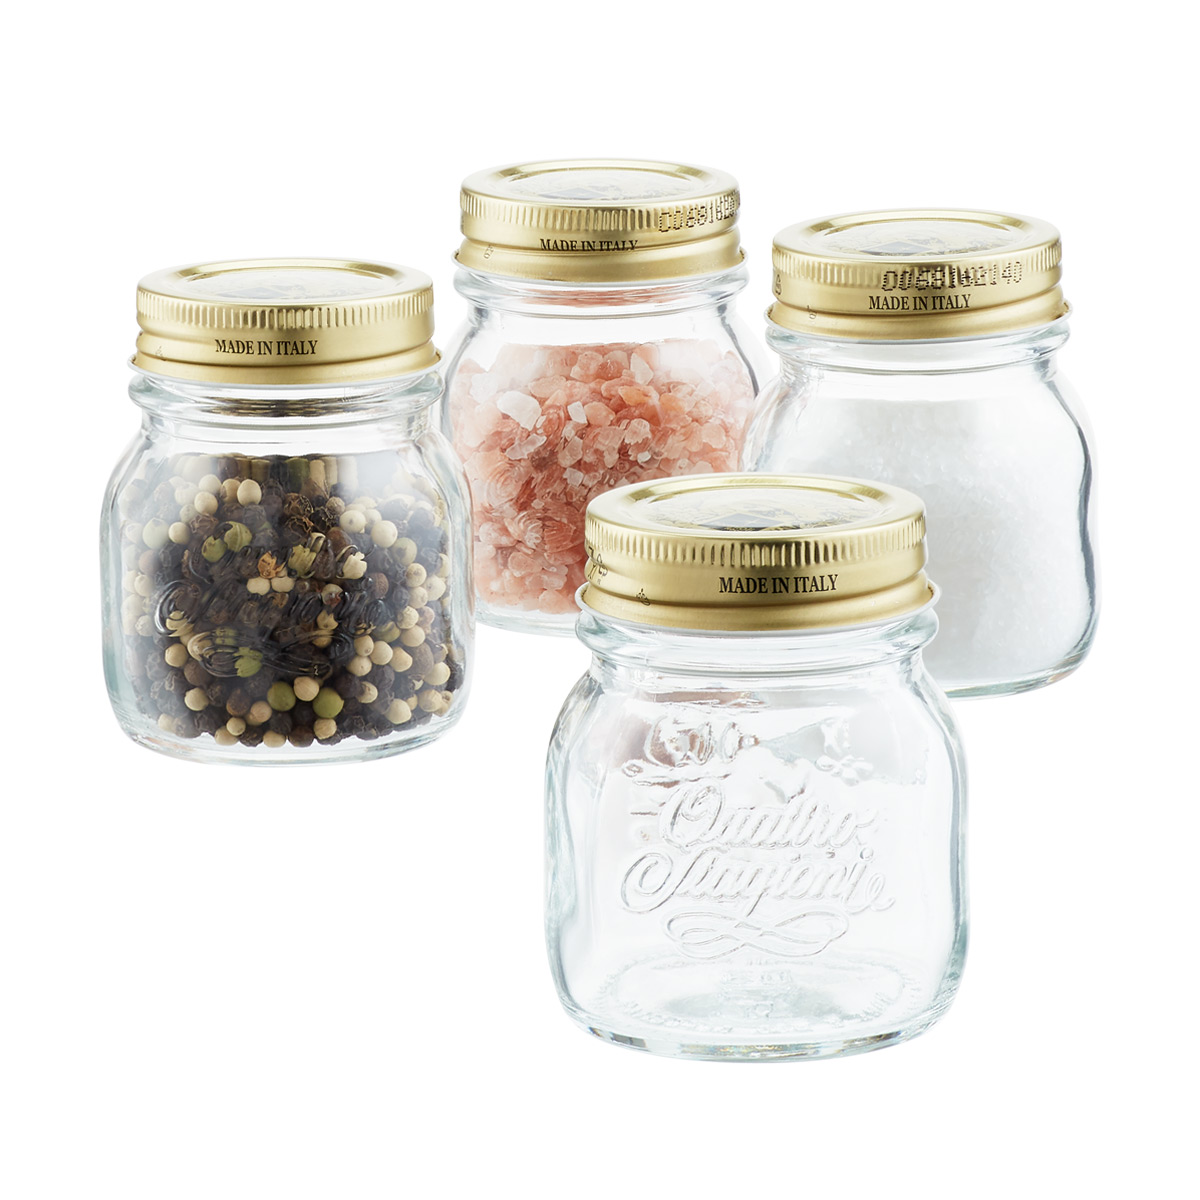 glass seasoning jars